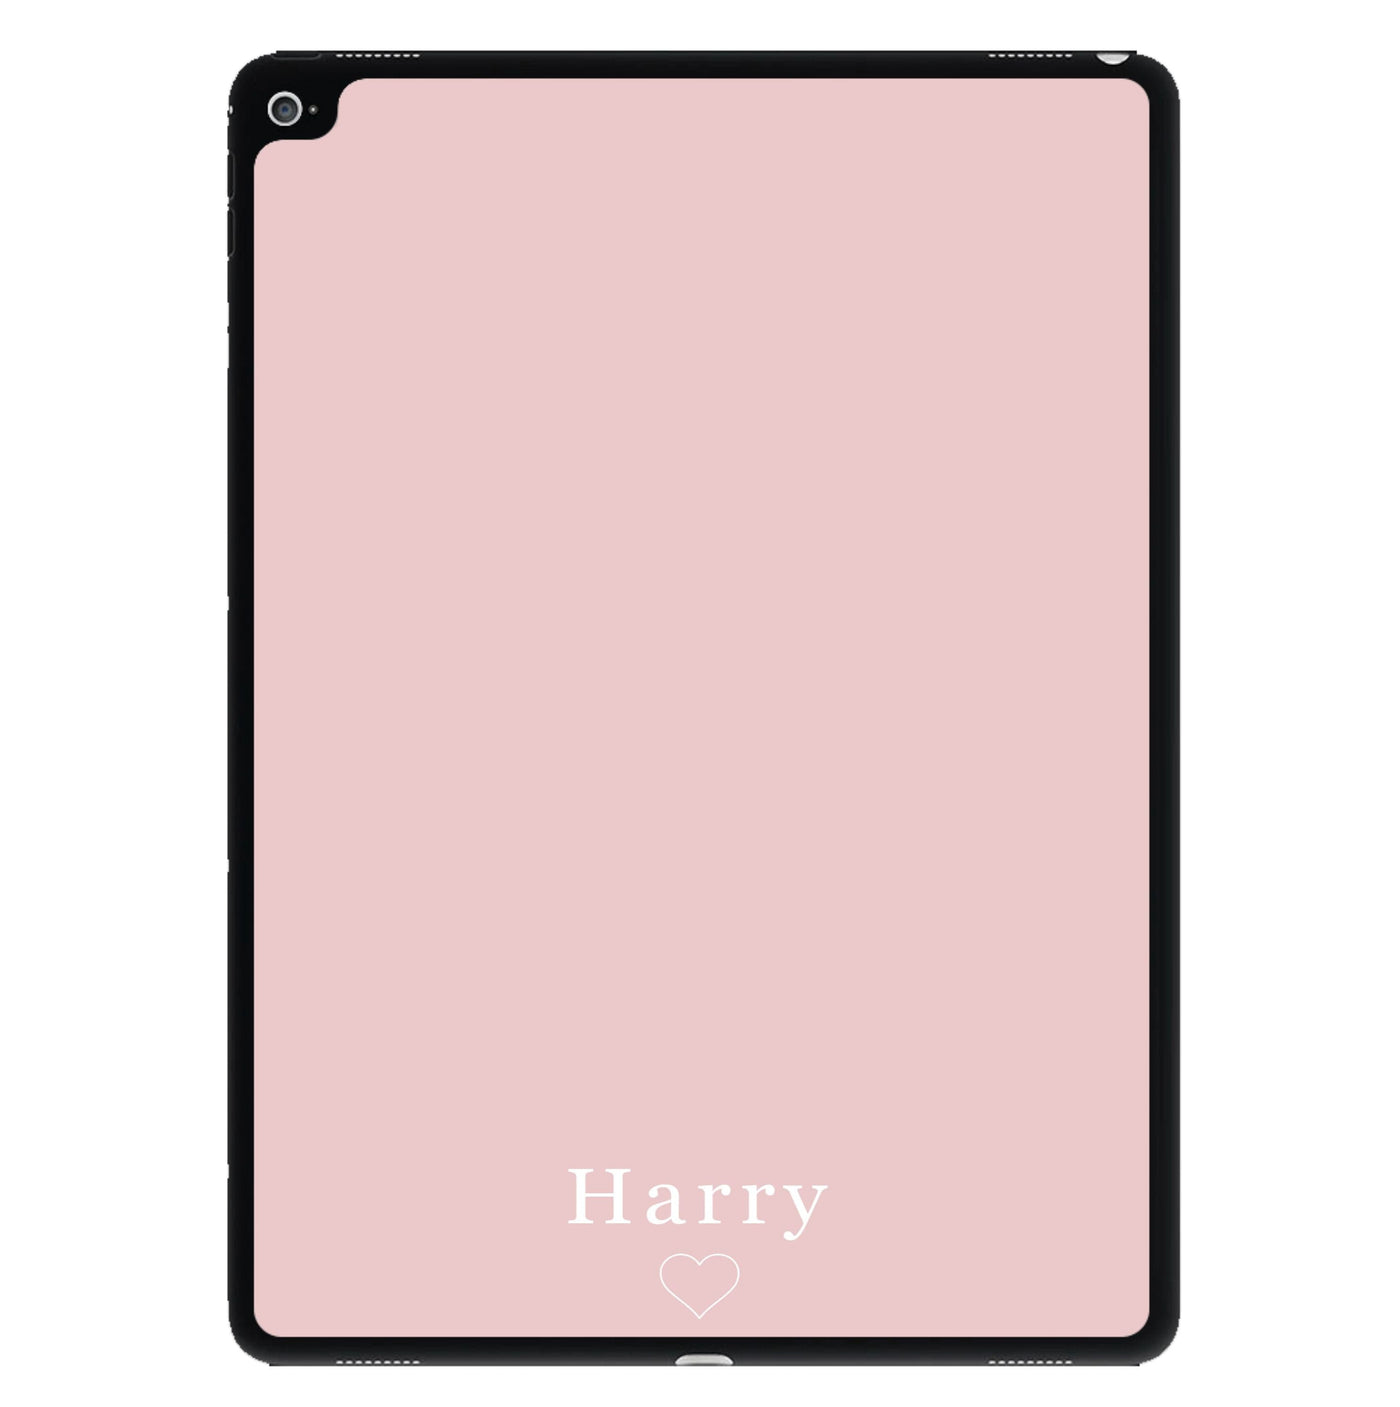 Harry - Pink Harry iPad Case